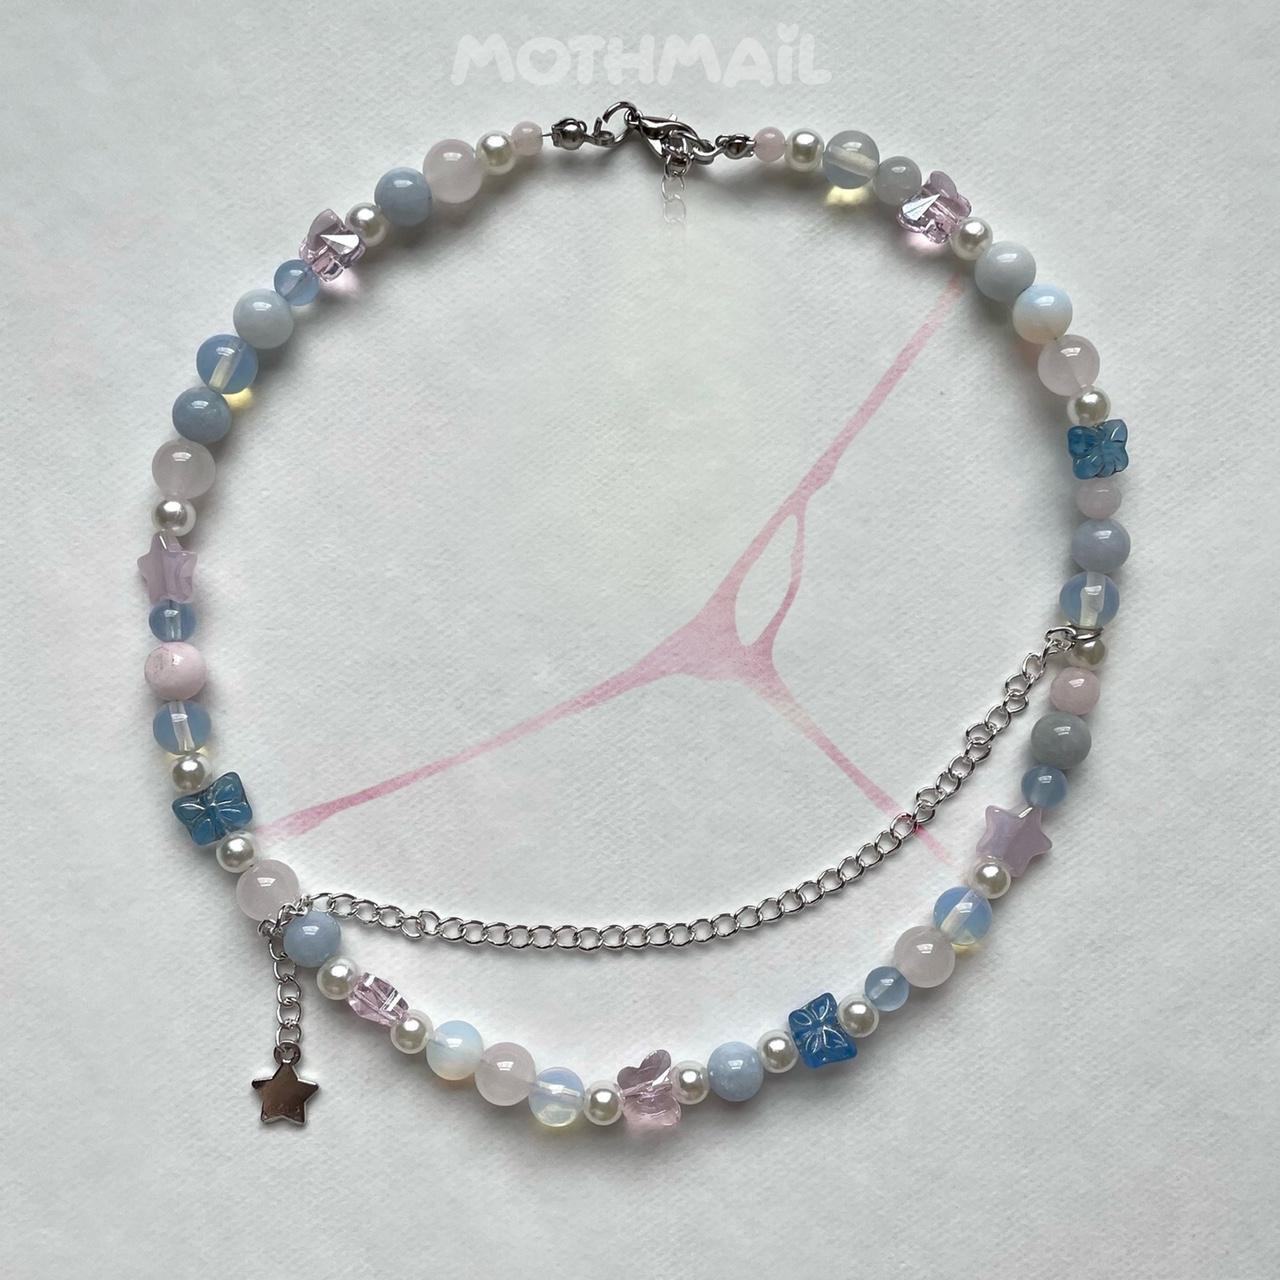 Women's Pink and Blue Jewellery | Depop